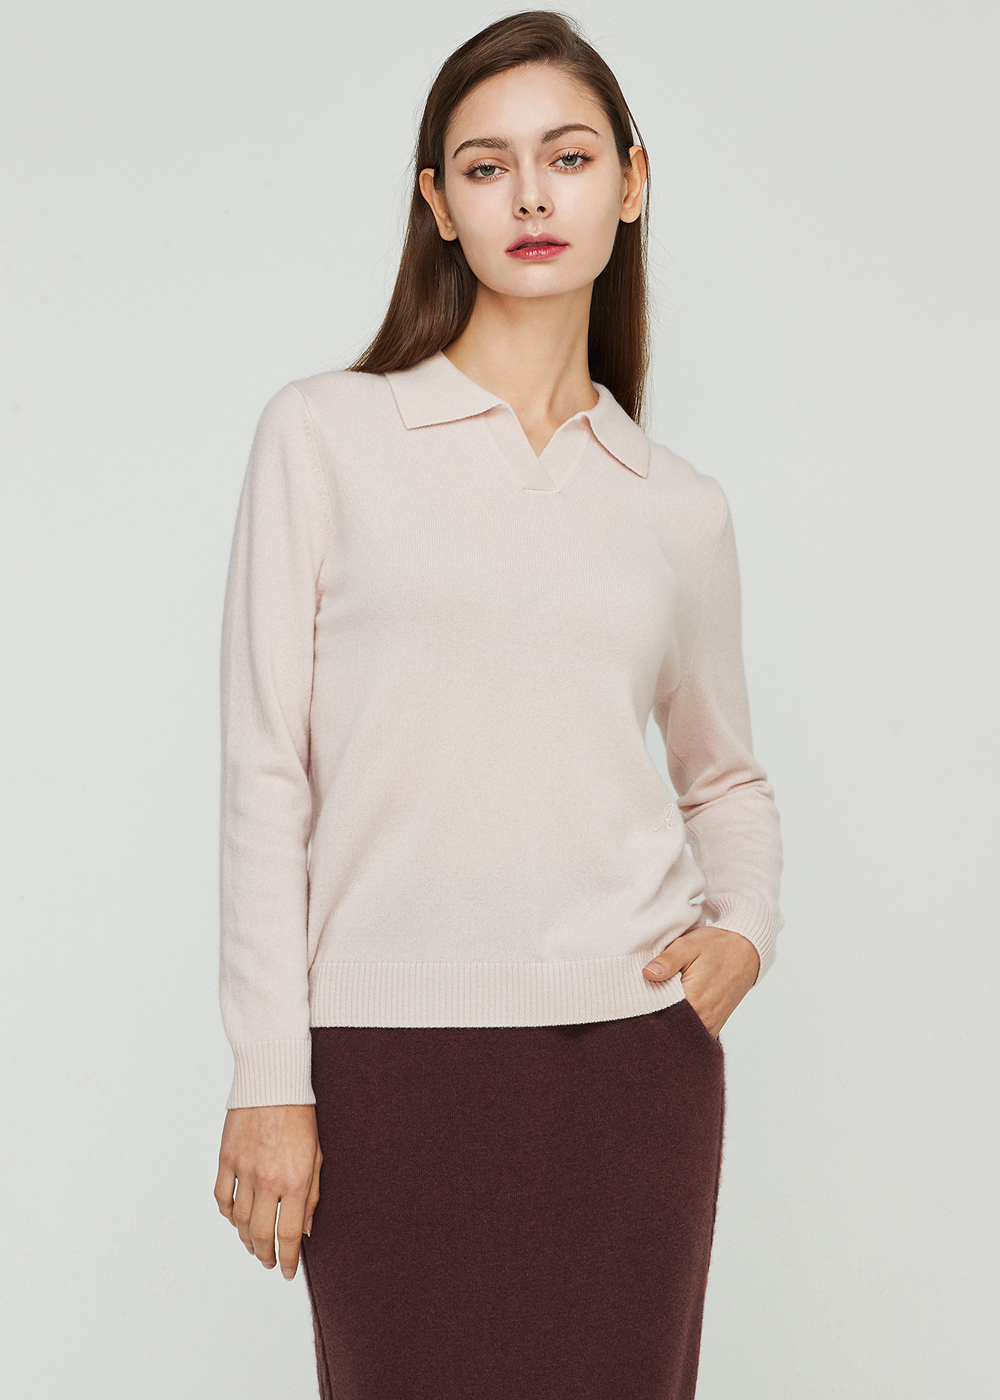 Open shirt pullover (blossom)  20%